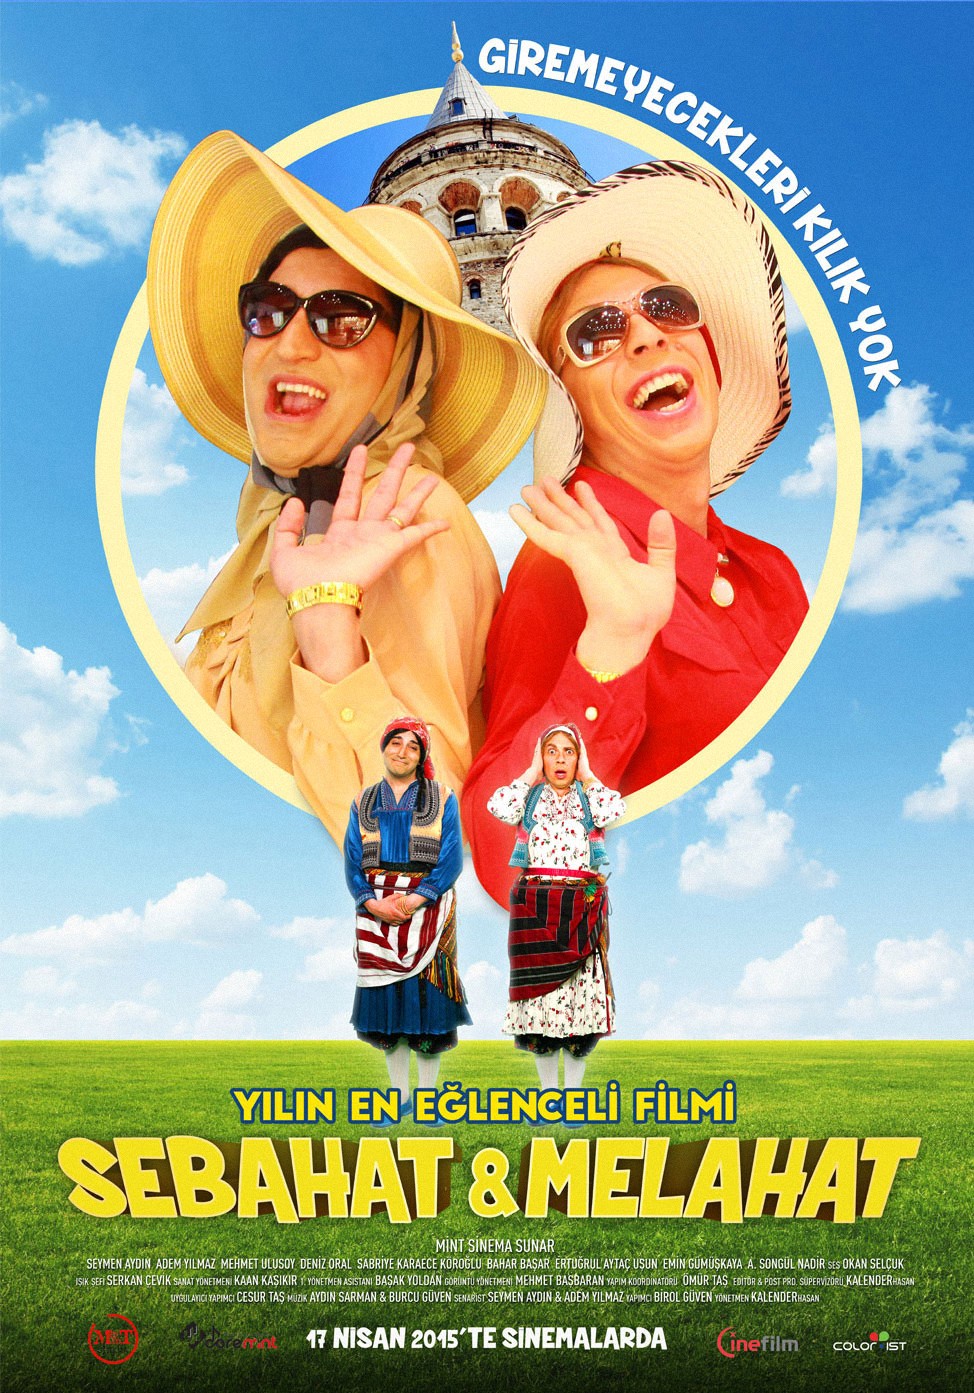 Extra Large Movie Poster Image for Sebahat & Melahat 